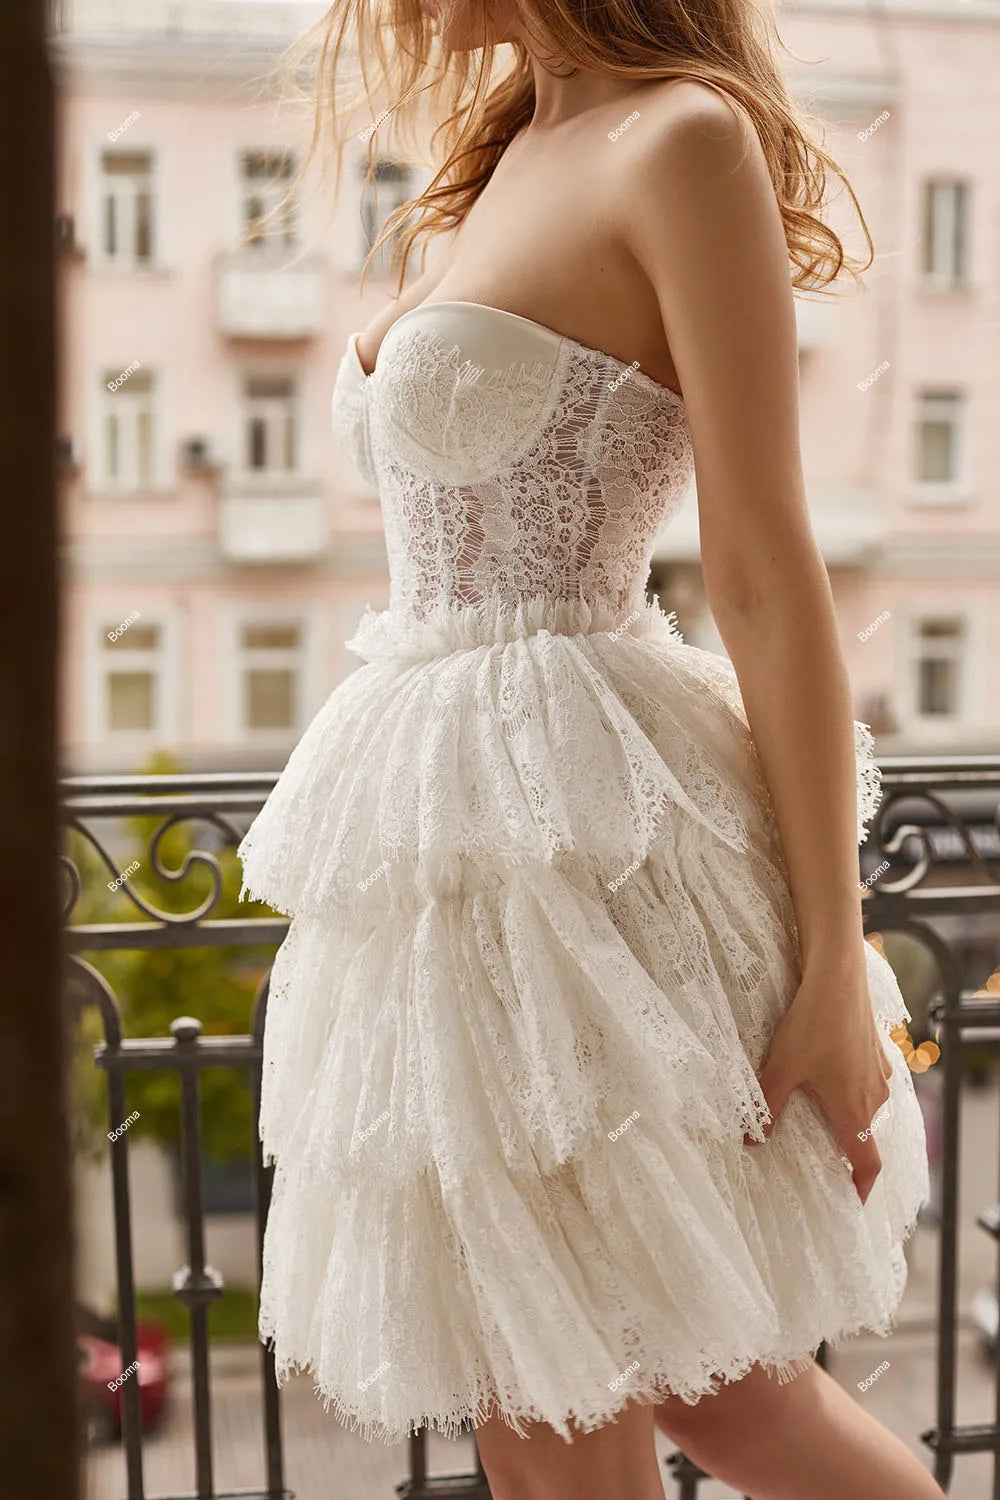 Gaun pengantin pendek renda bertingkat a-line sweetheart lengan pengantin lengan gaun pesta untuk wanita corest bridals gaun malam